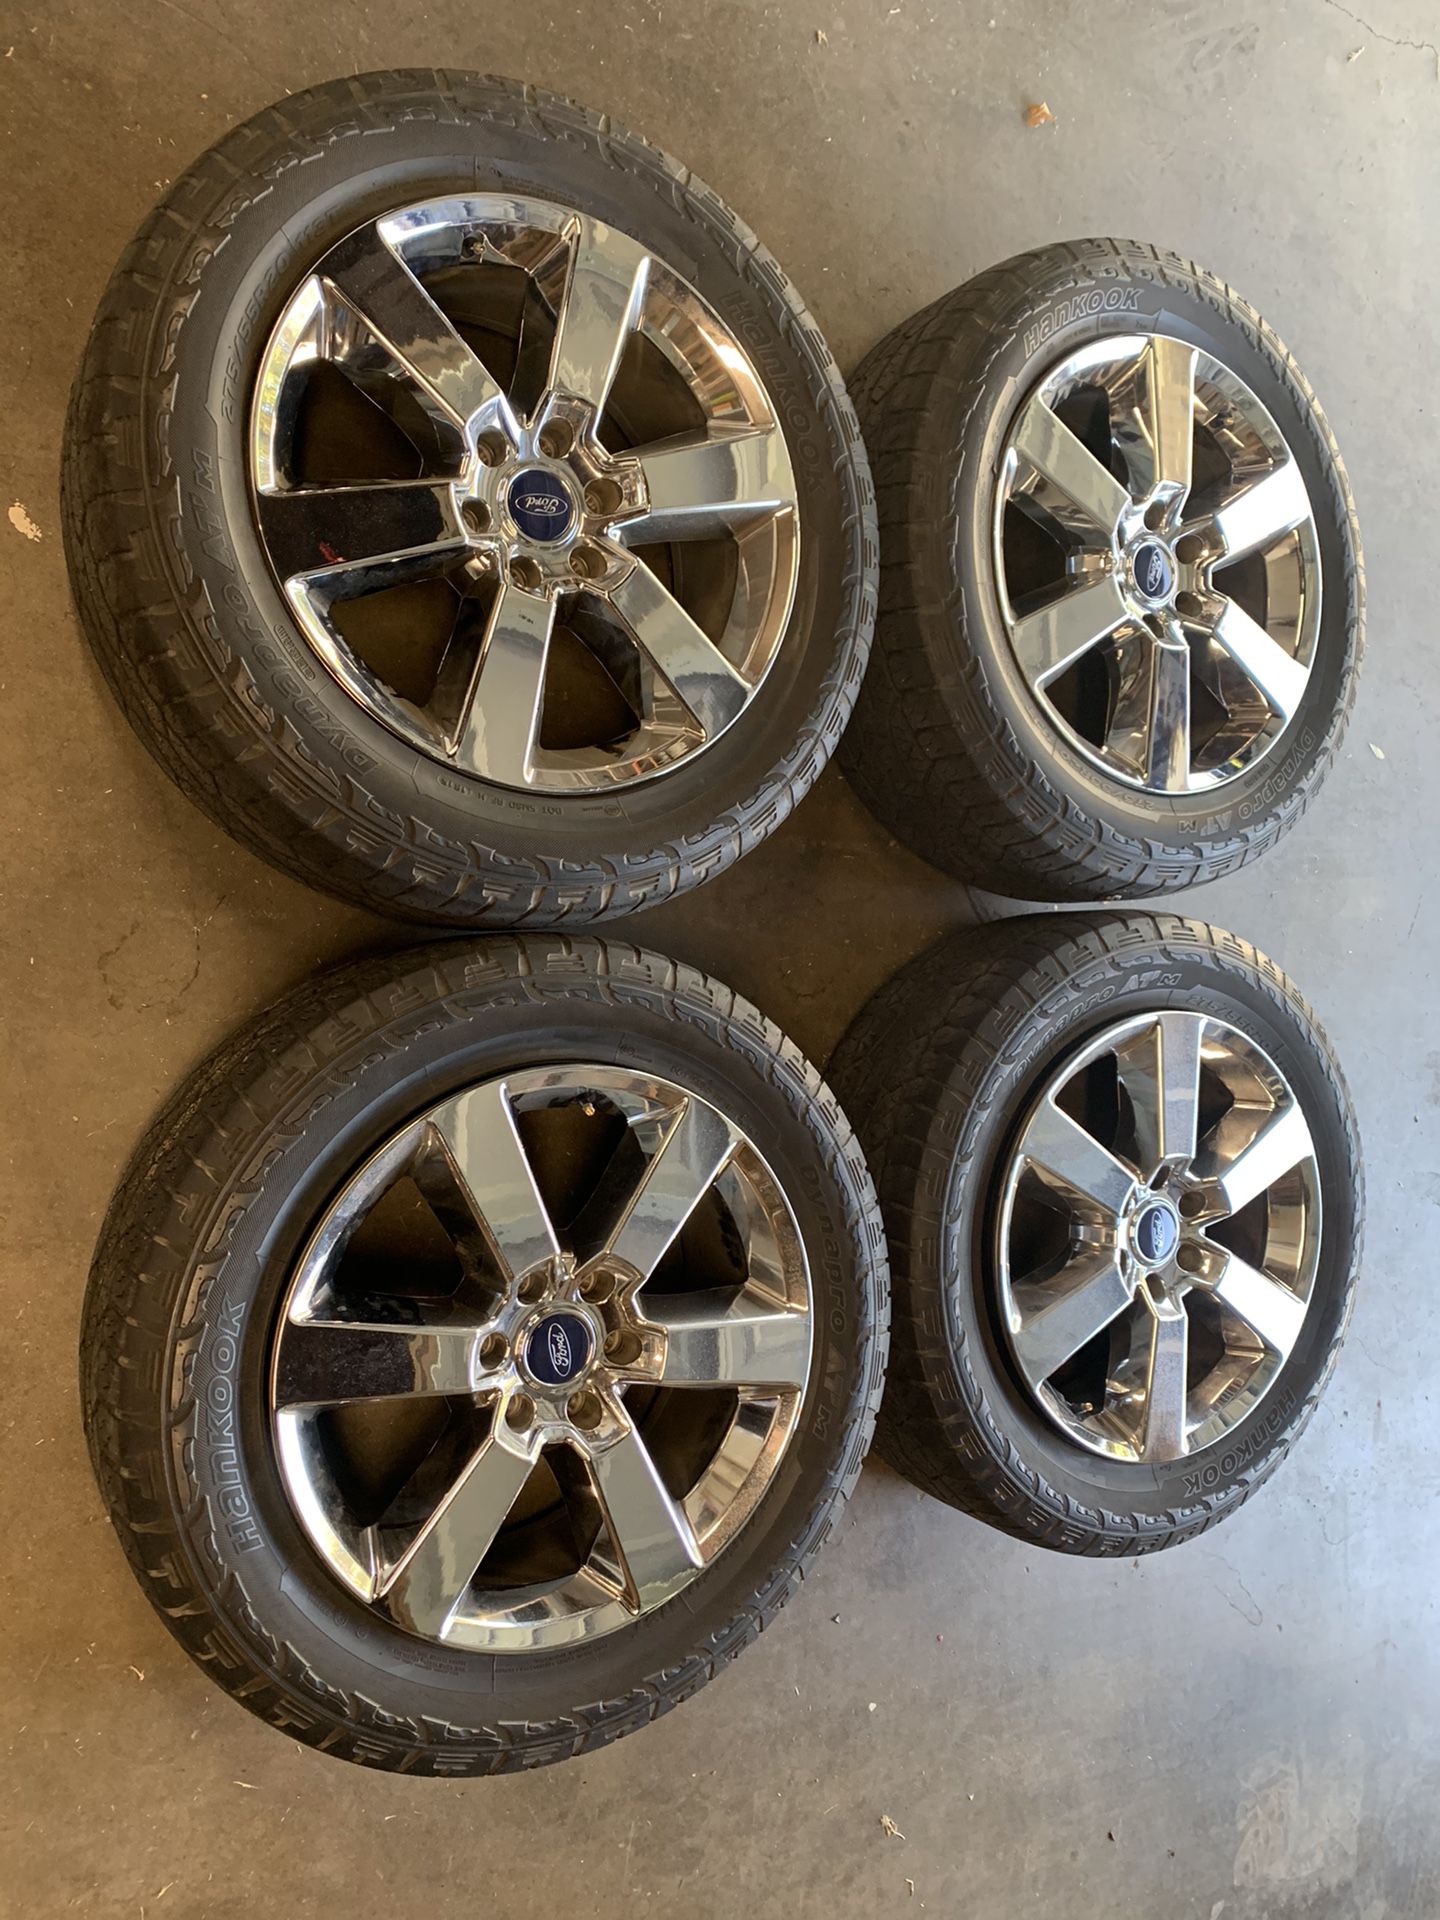 20 inch Ford Wheels & Tires - CHEAP!